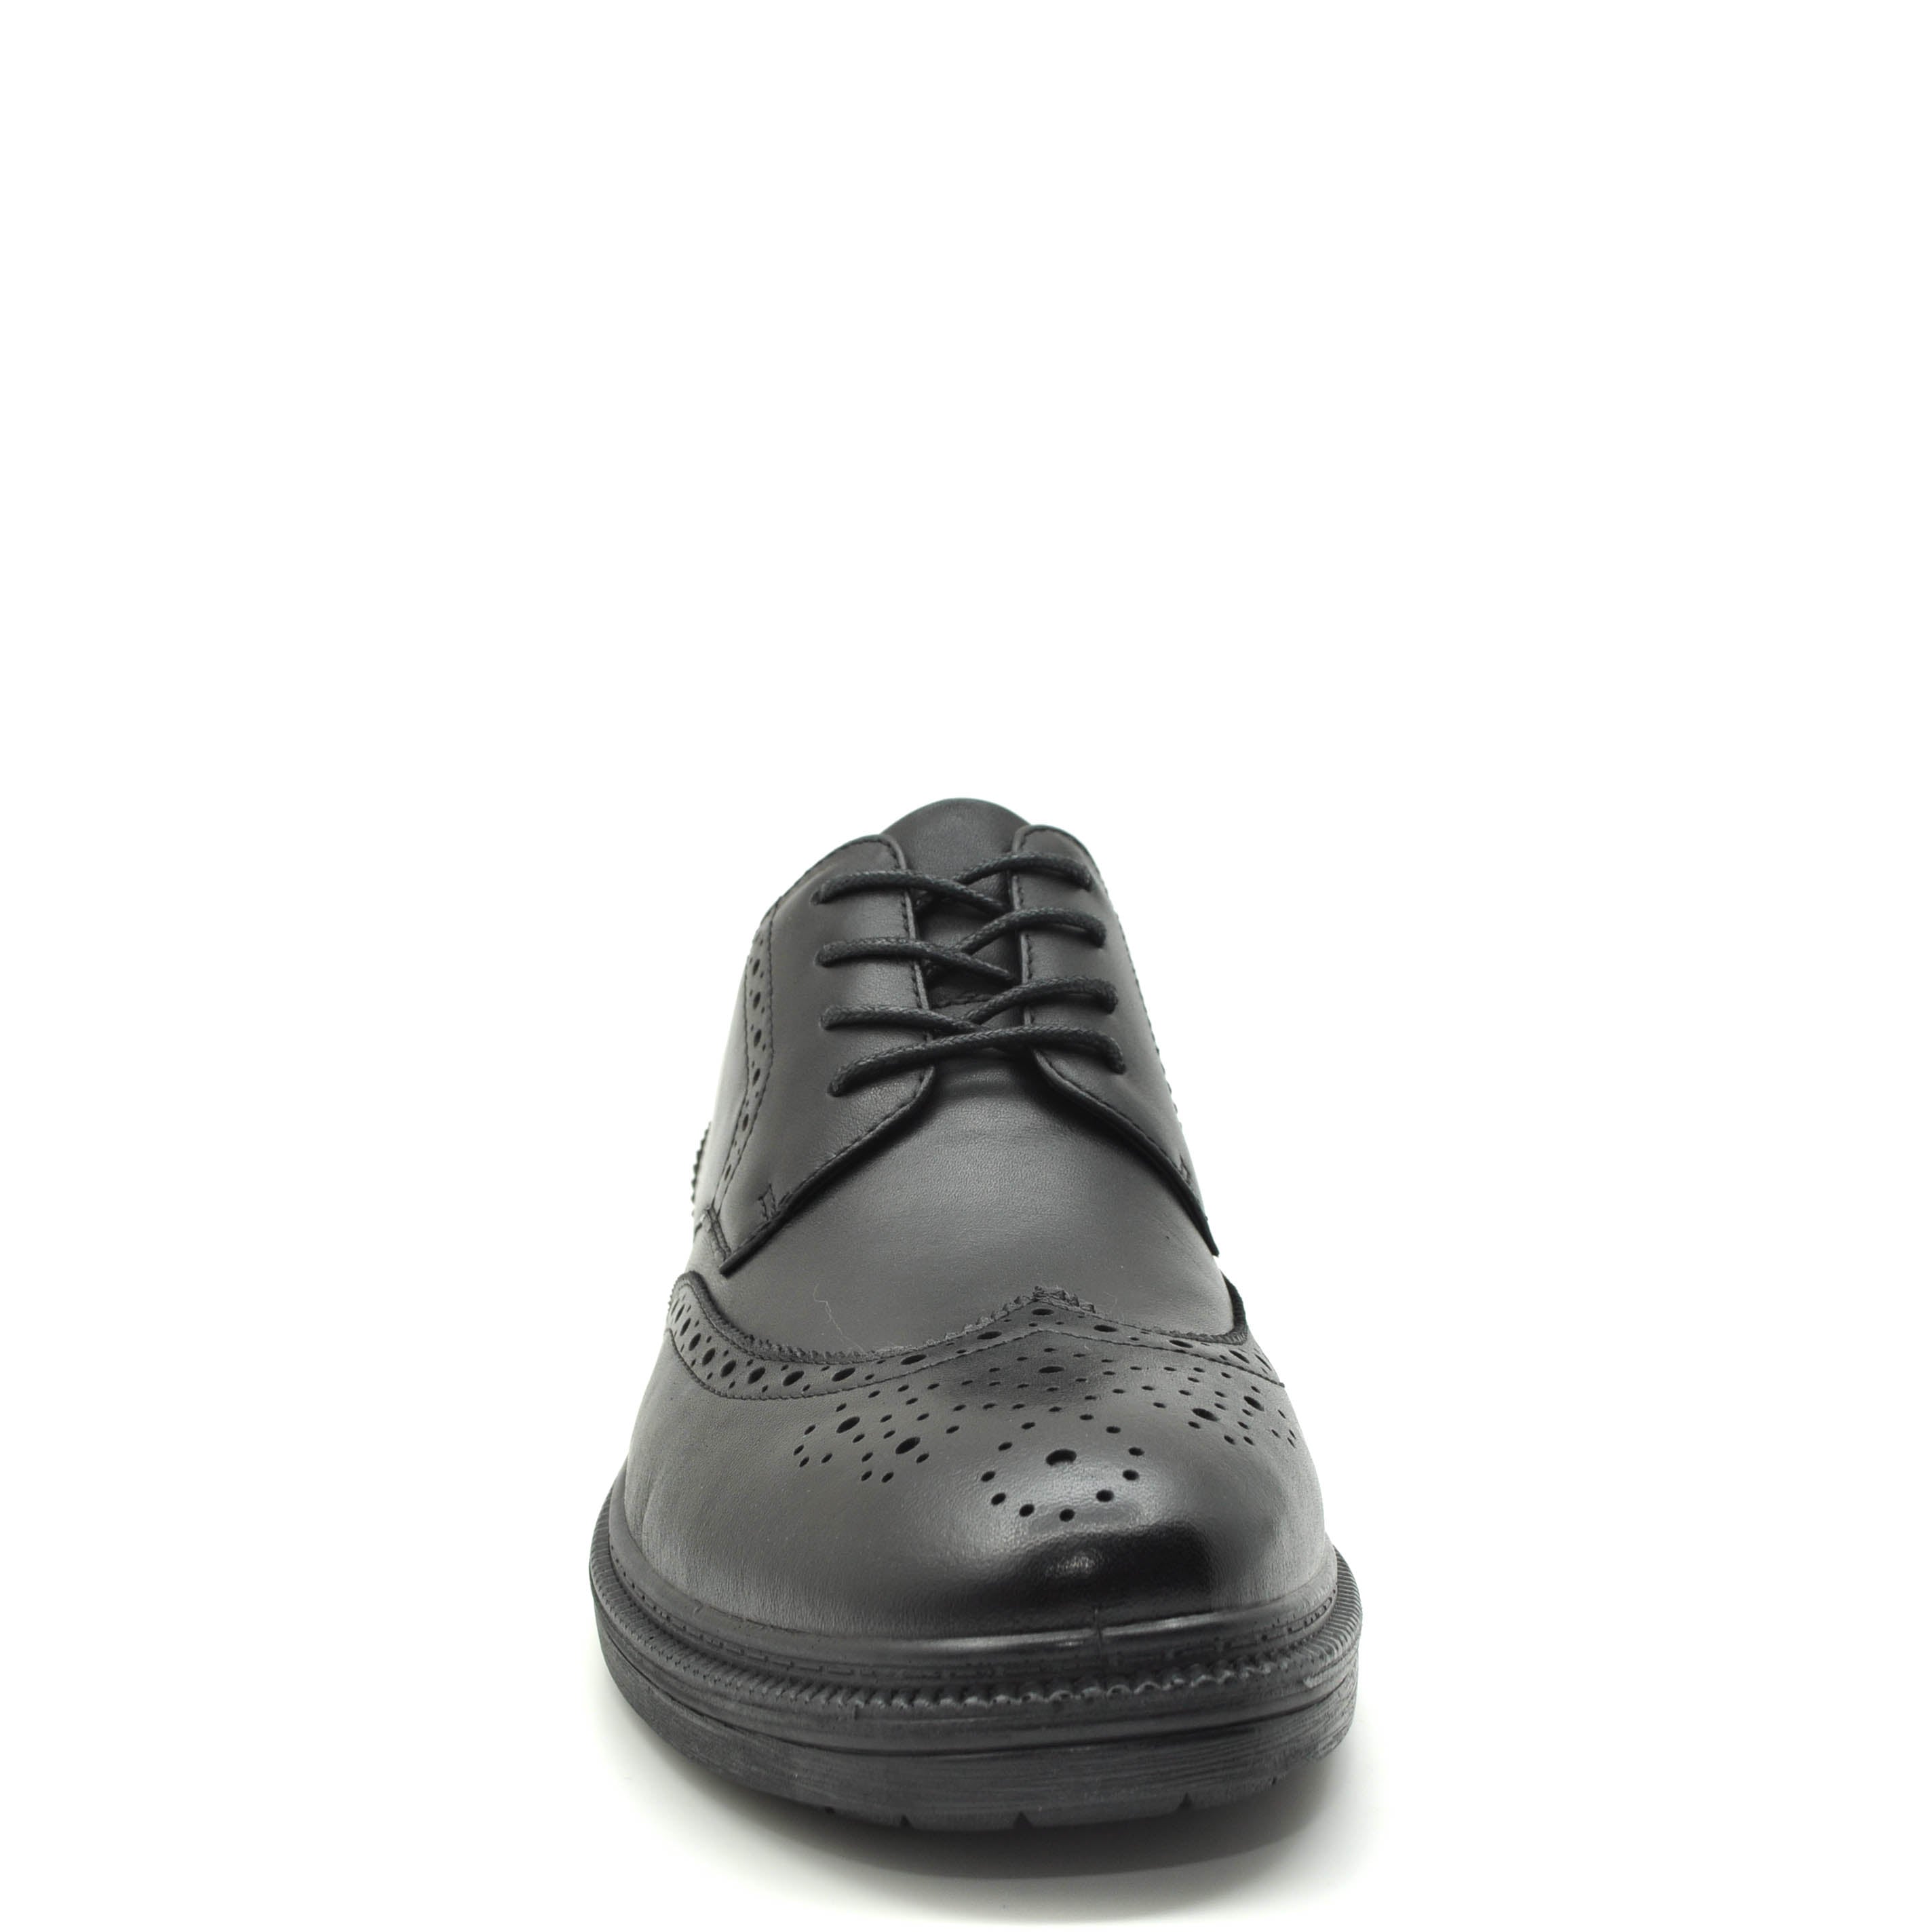 G comfort black brogue shoes